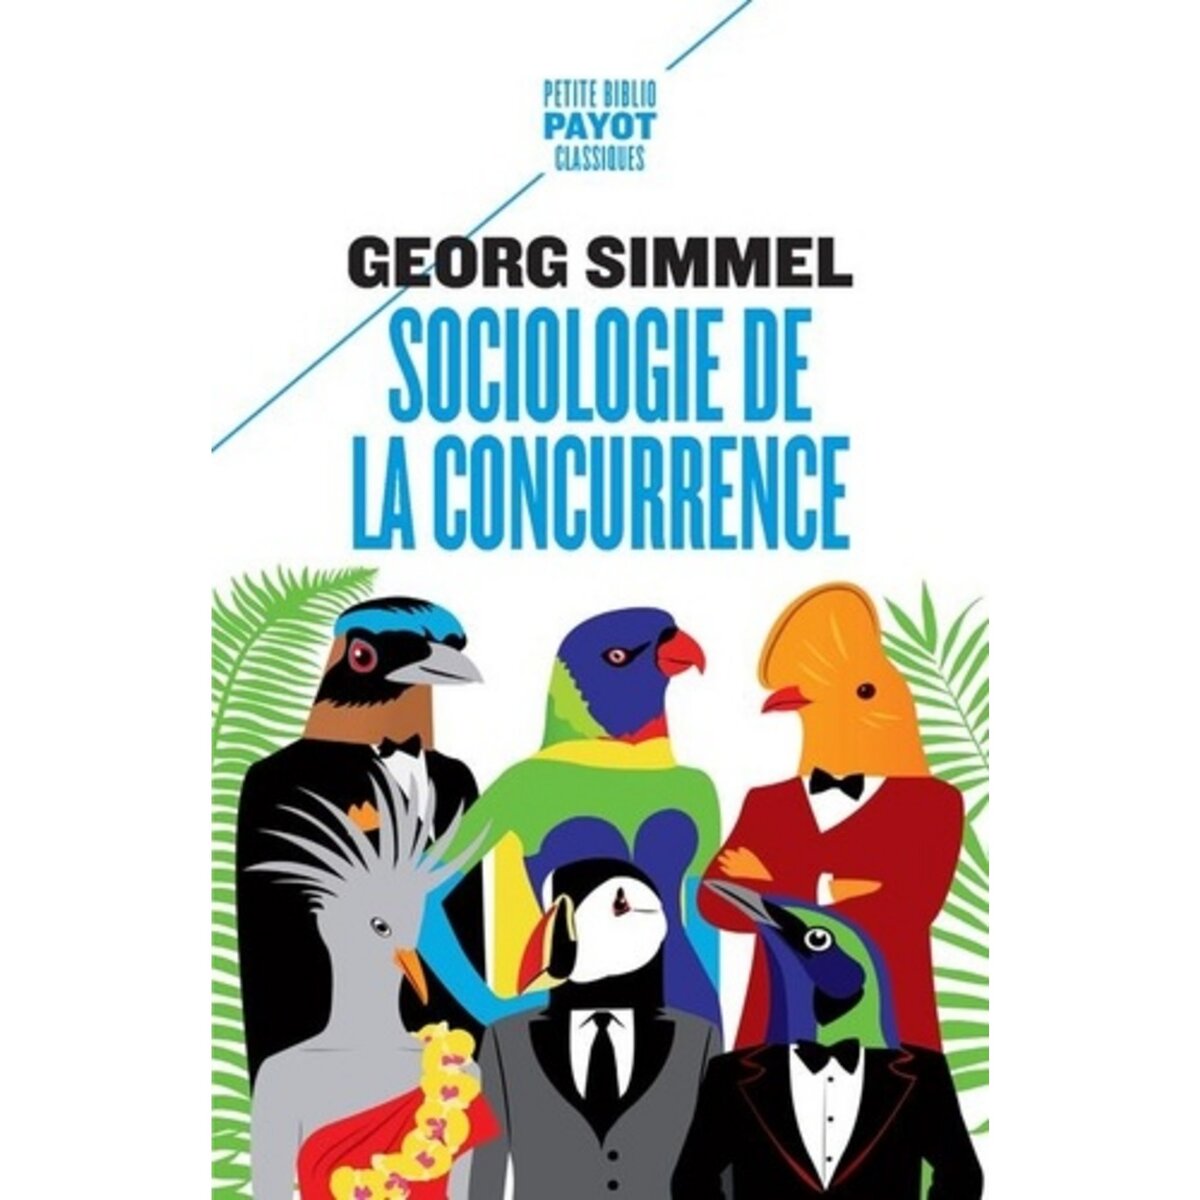  SOCIOLOGIE DE LA CONCURRENCE, Simmel Georg